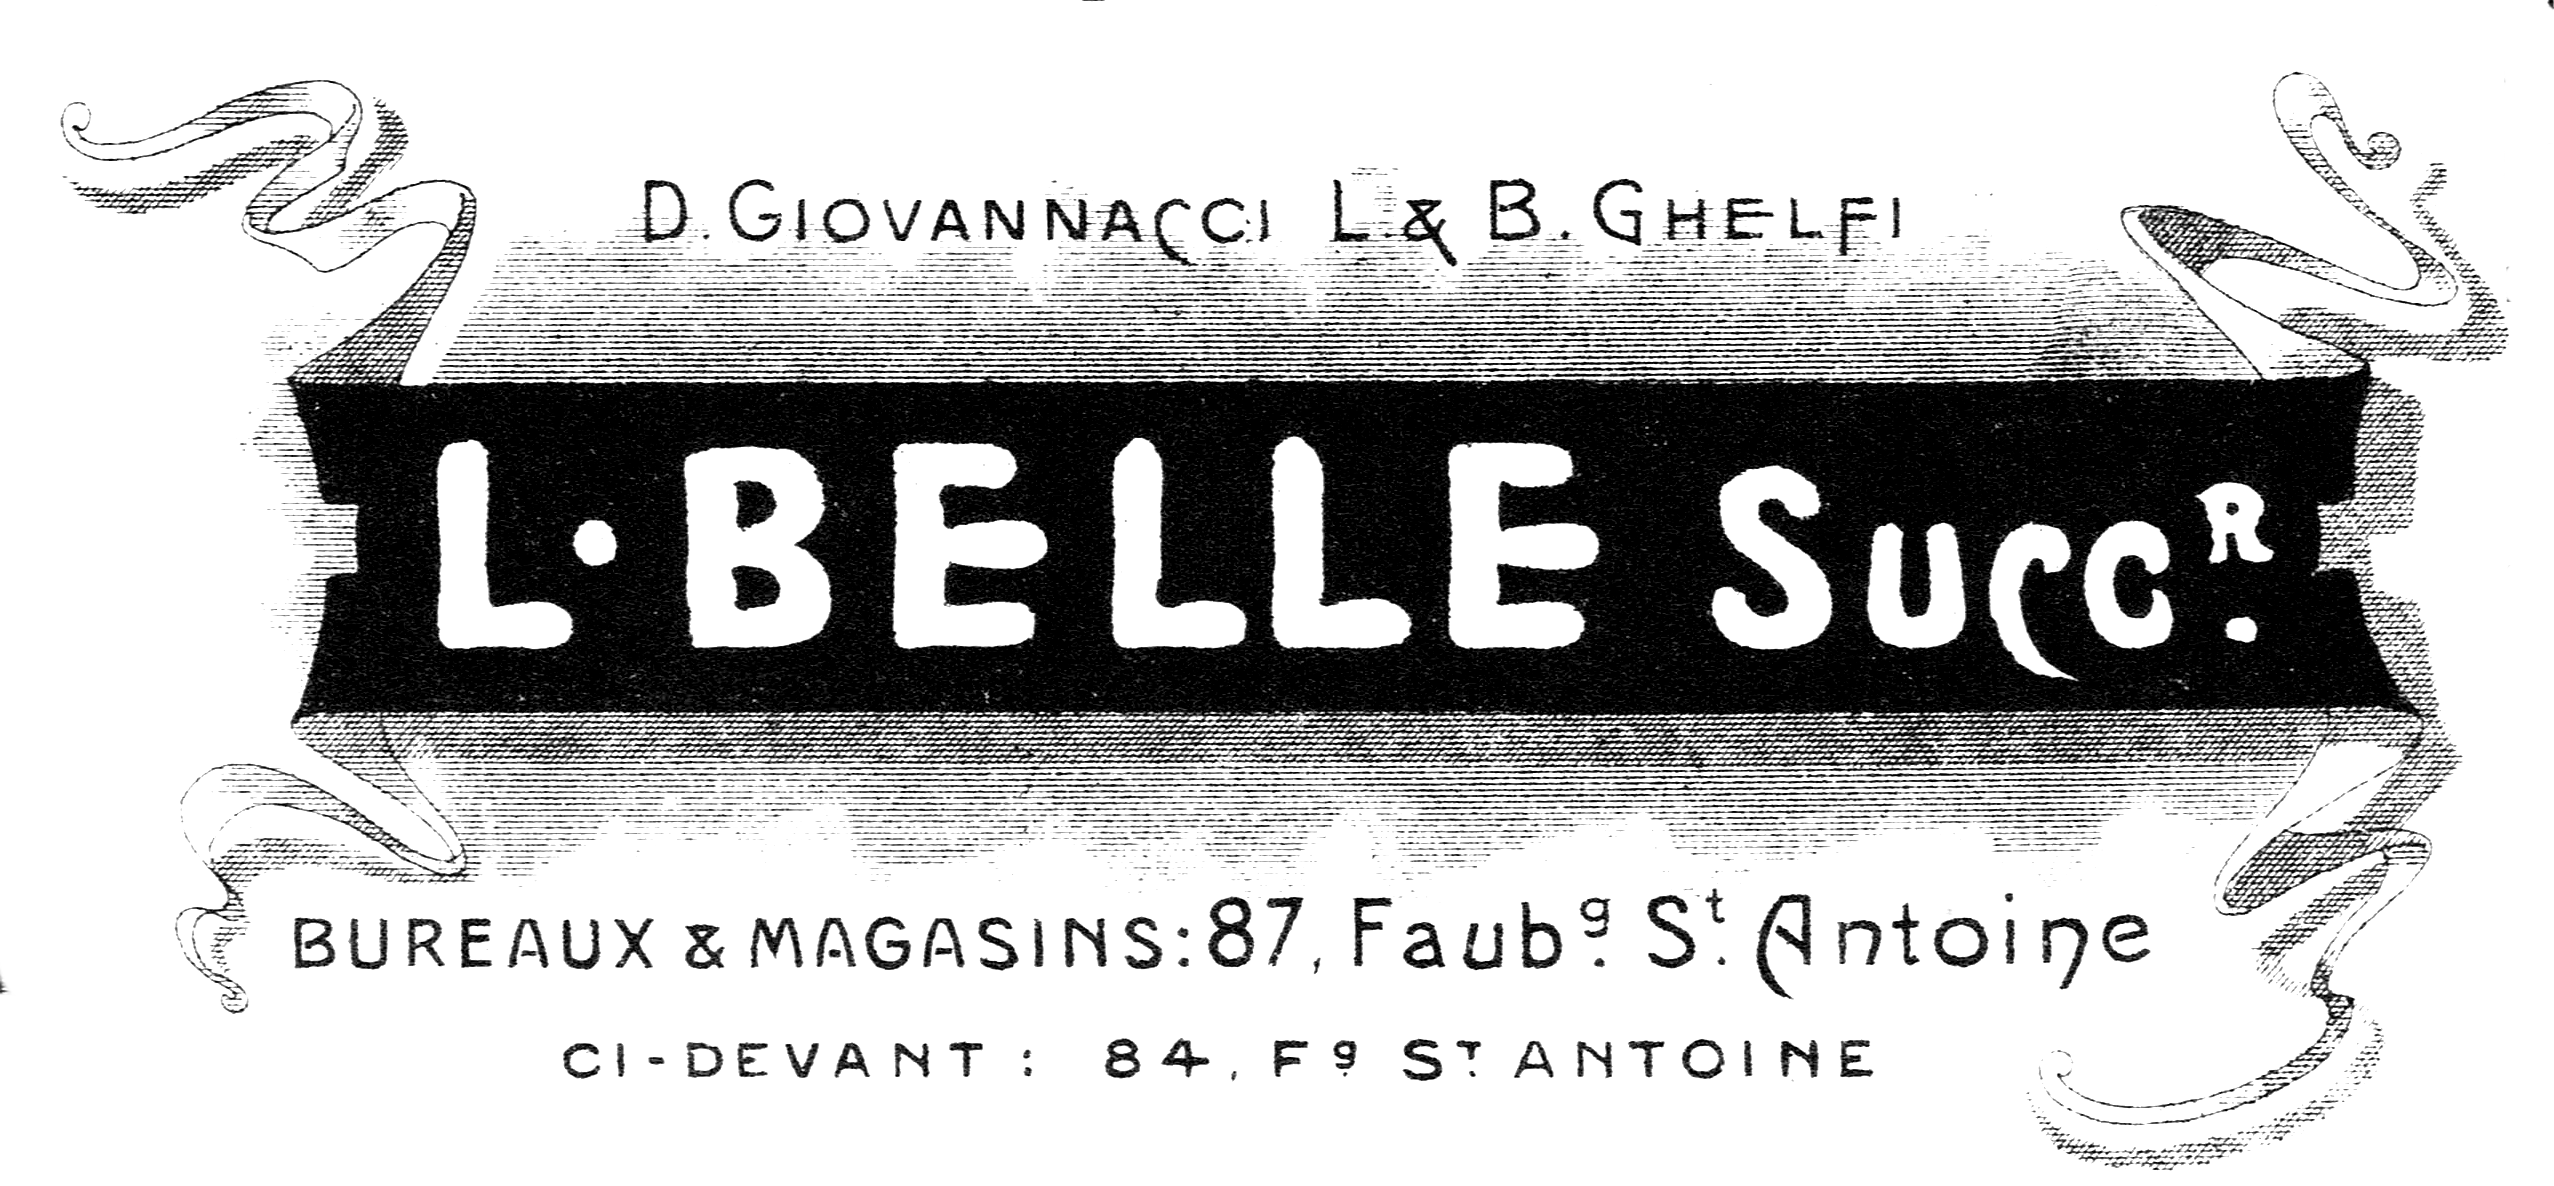 L. Belle letterhead, 28.10.1916